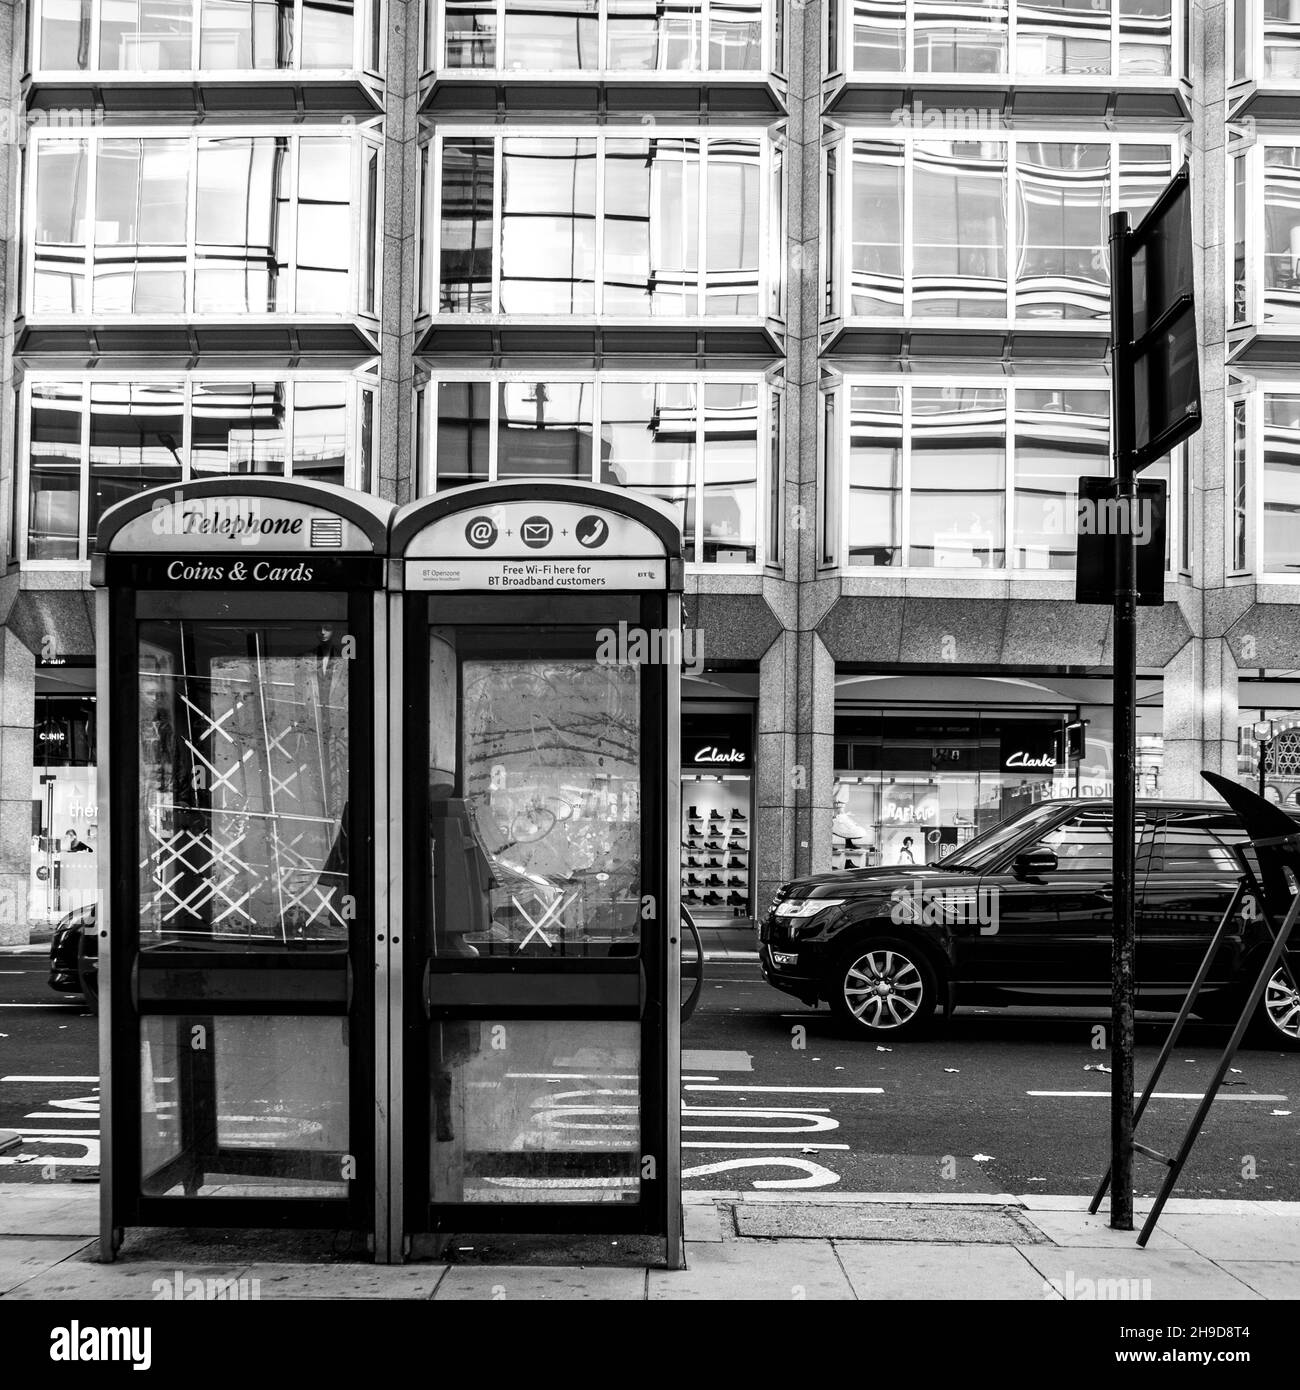 London phone box Black and White Stock Photos & Images - Alamy